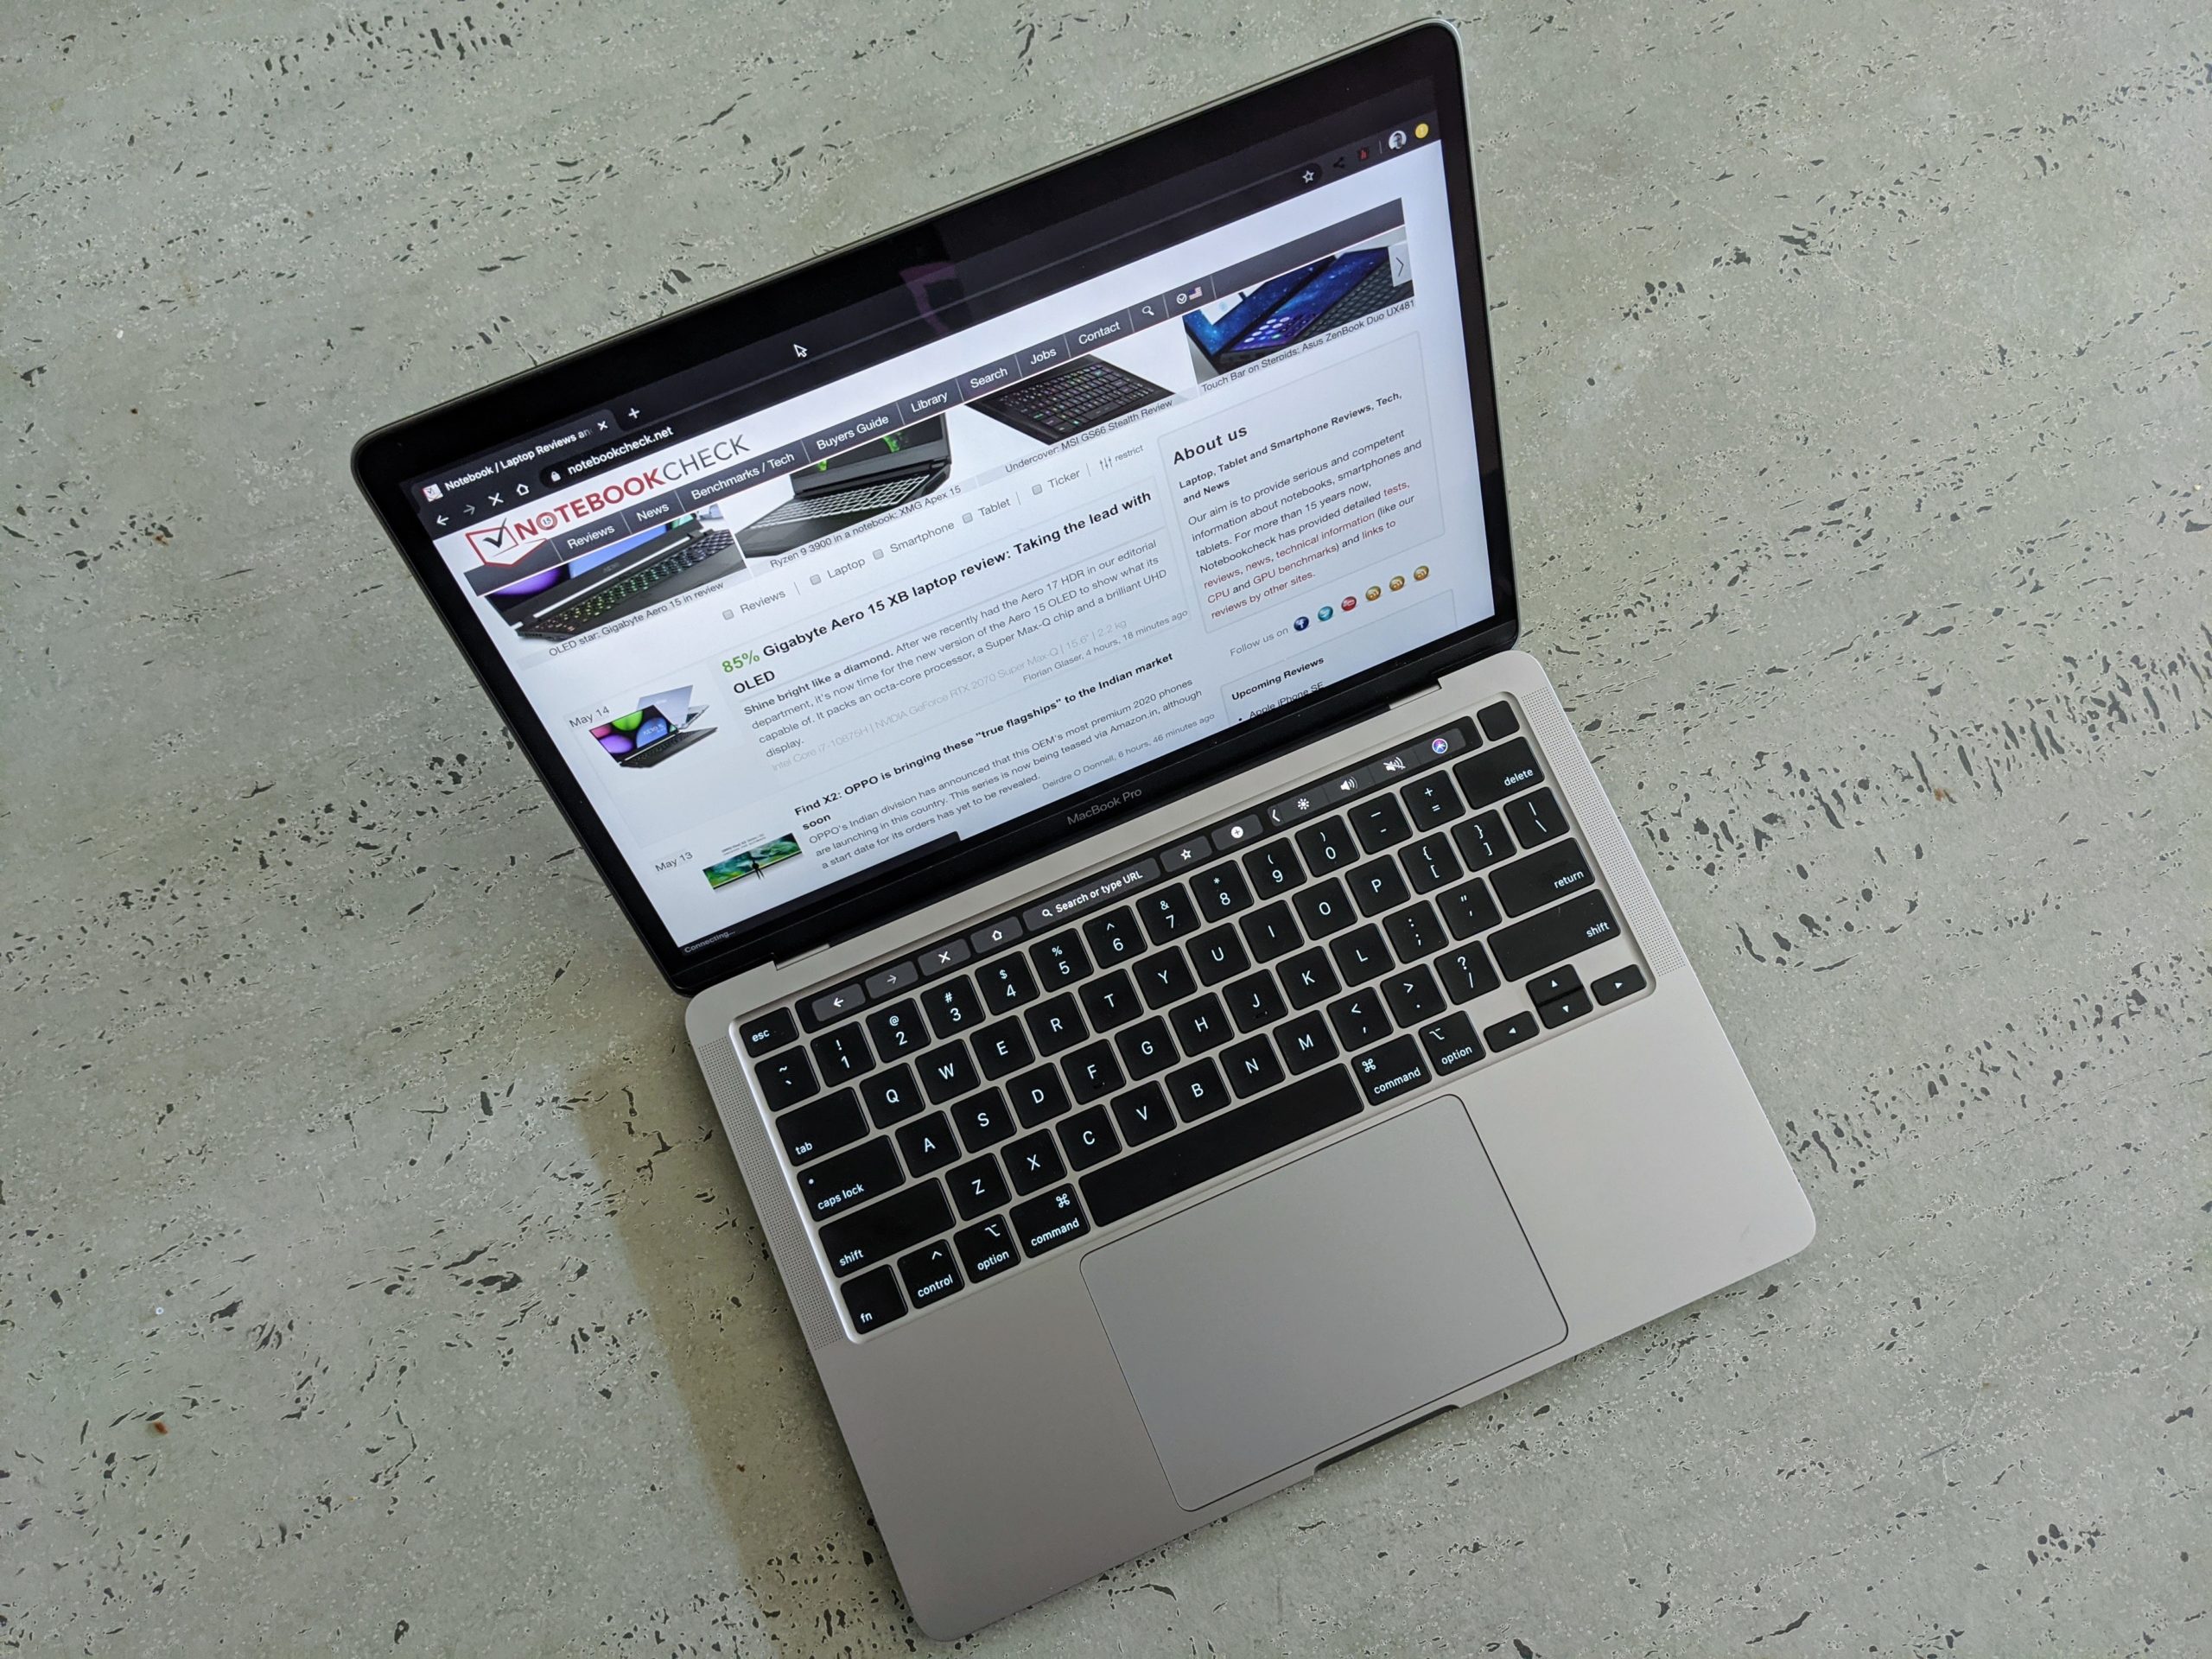 Hands-on: 13.3-inch Apple MacBook Pro 2.0GHz Ice Lake model